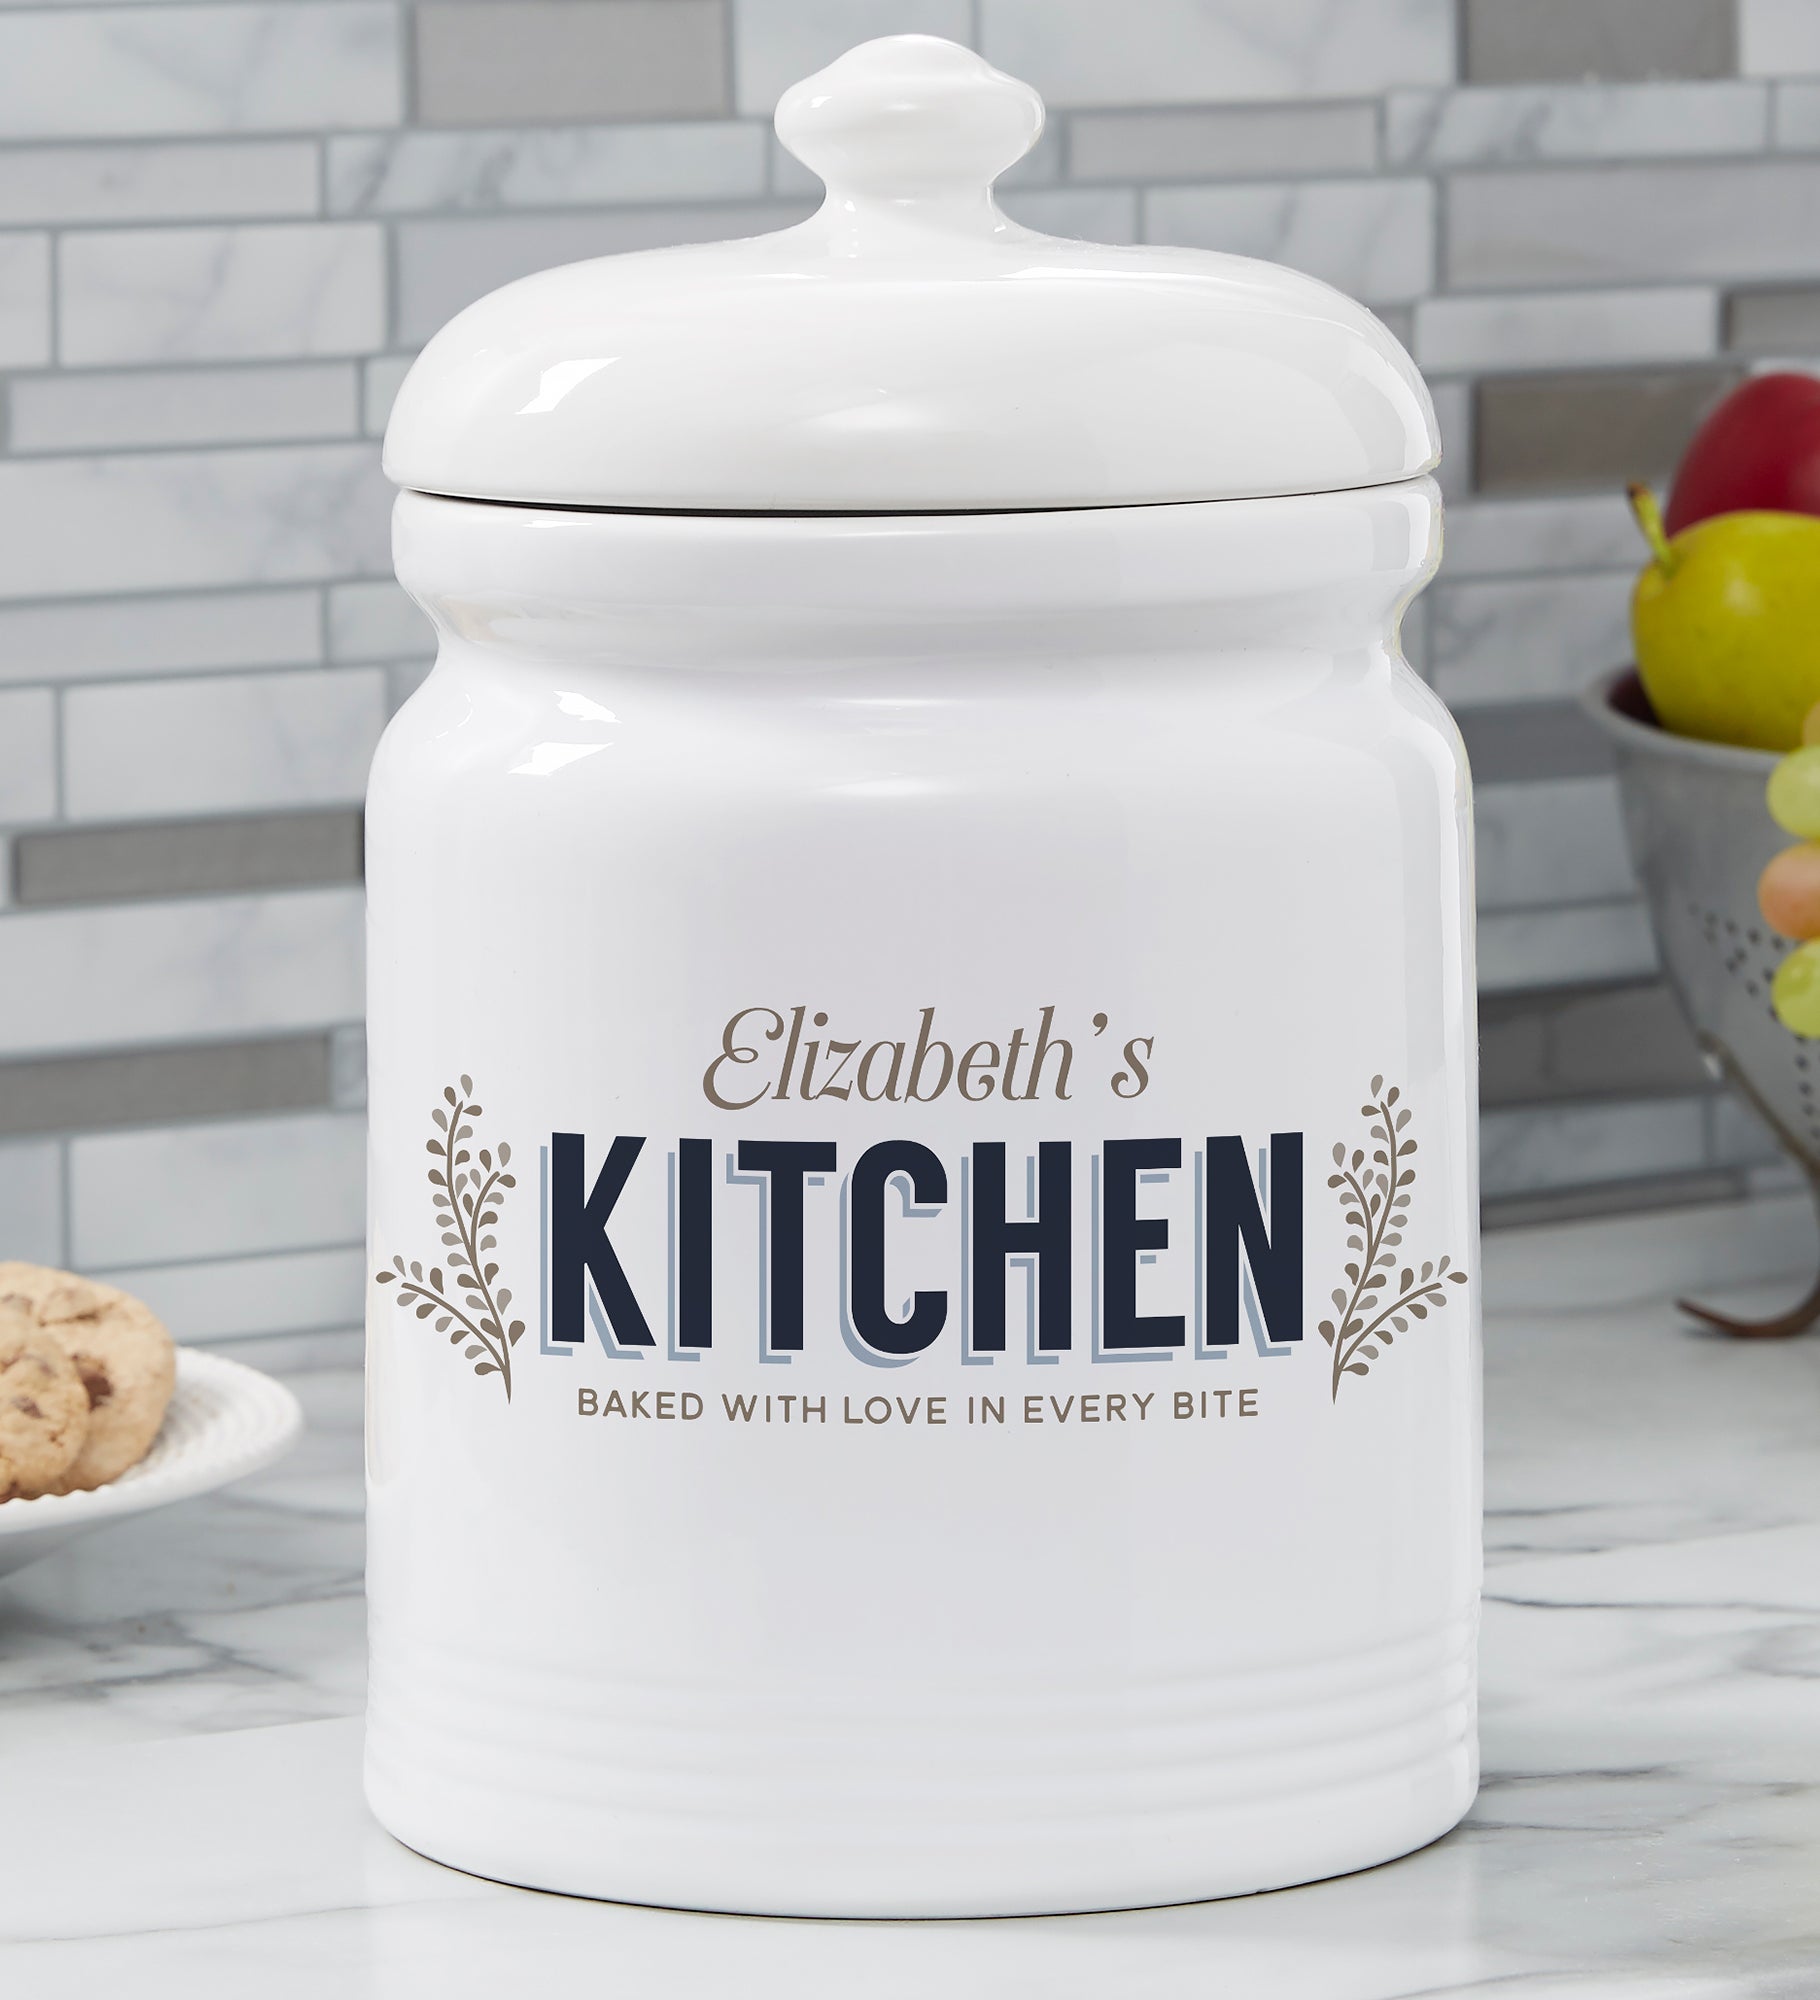 Her Kitchen Personalized Cookie Jar